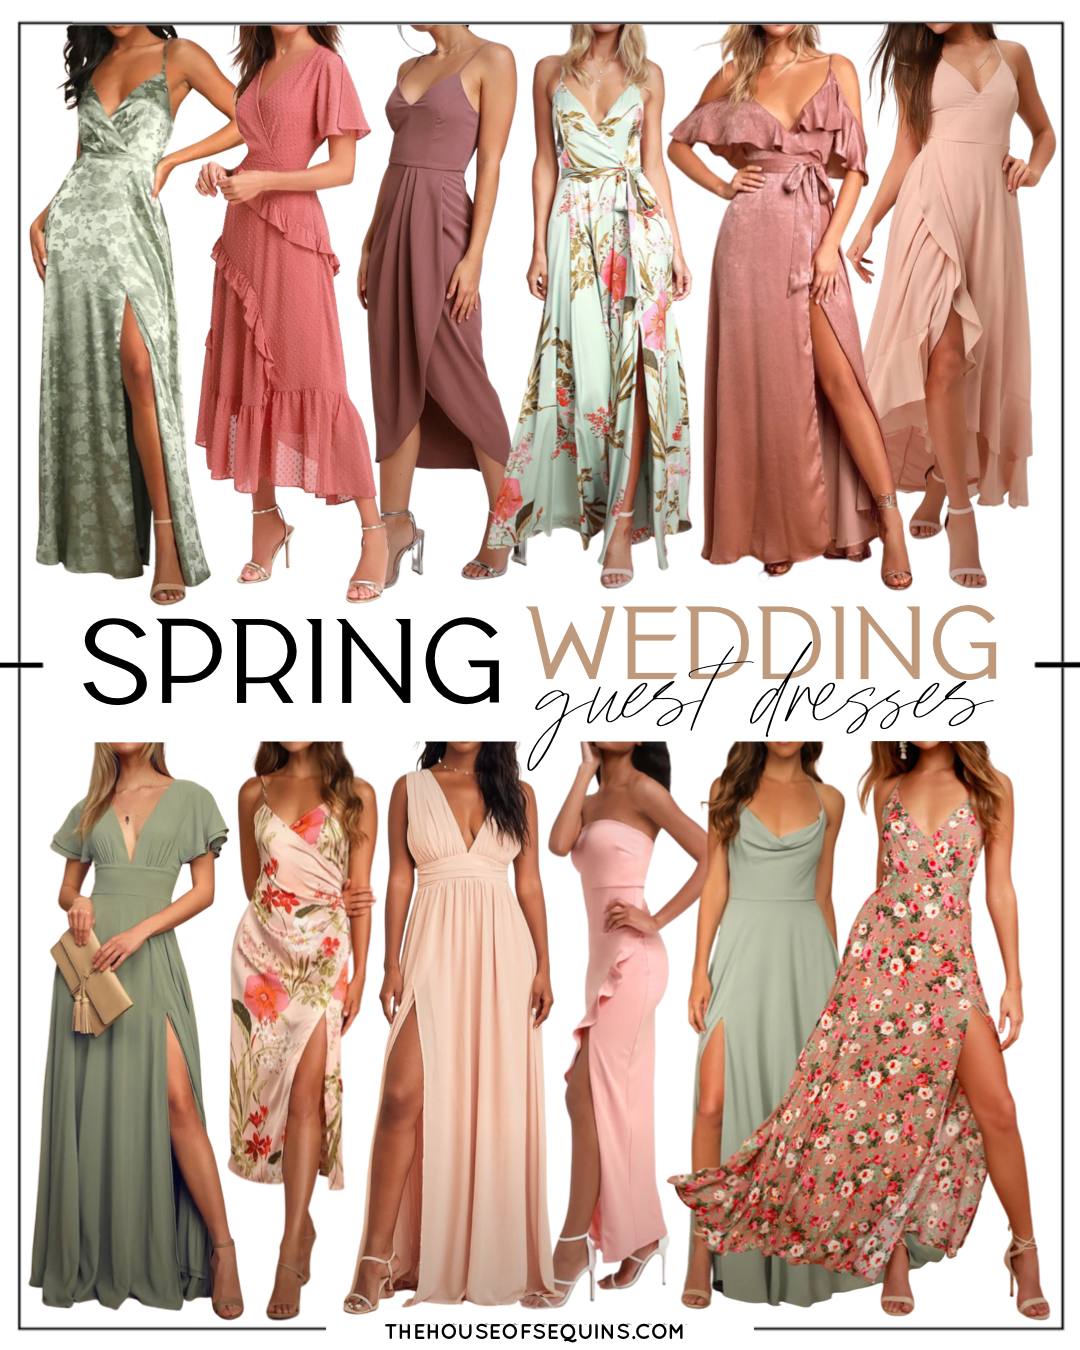 dresses for spring wedding guest